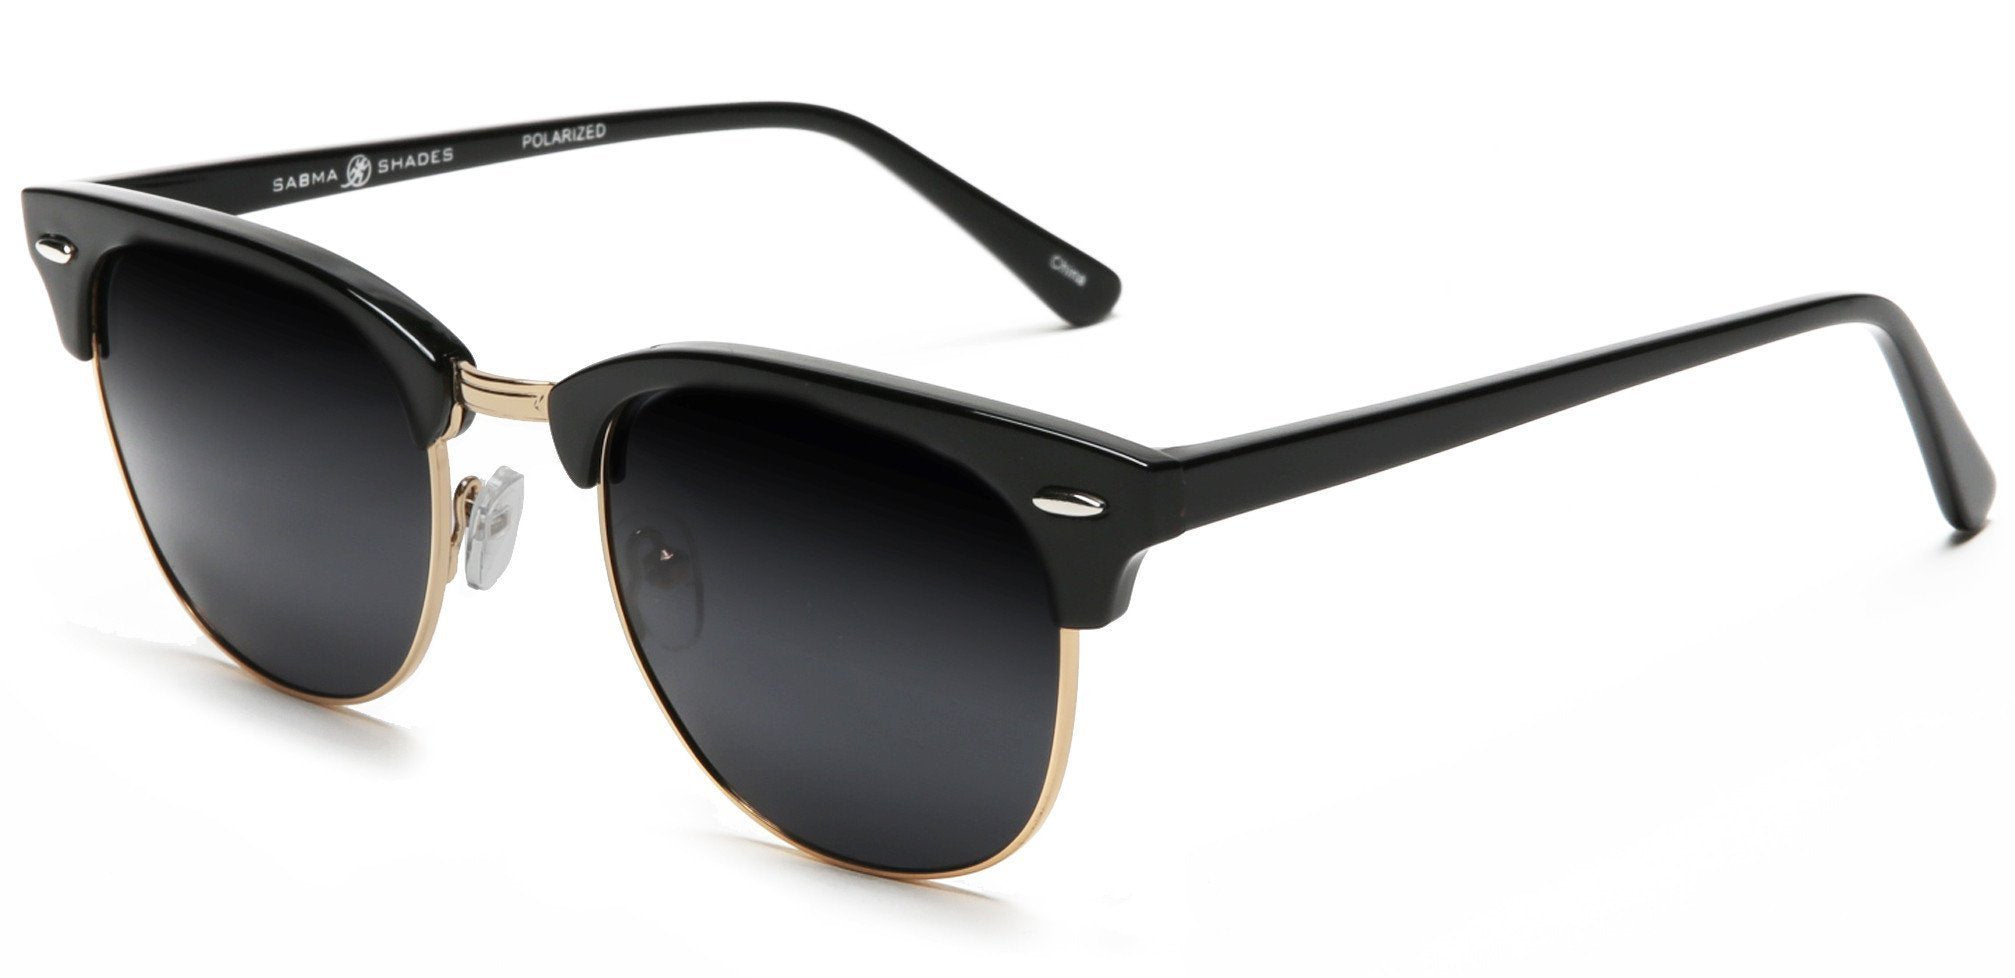 Samba Shades Polarized Club Master Vintage Sunglasses with Shiny Black ...